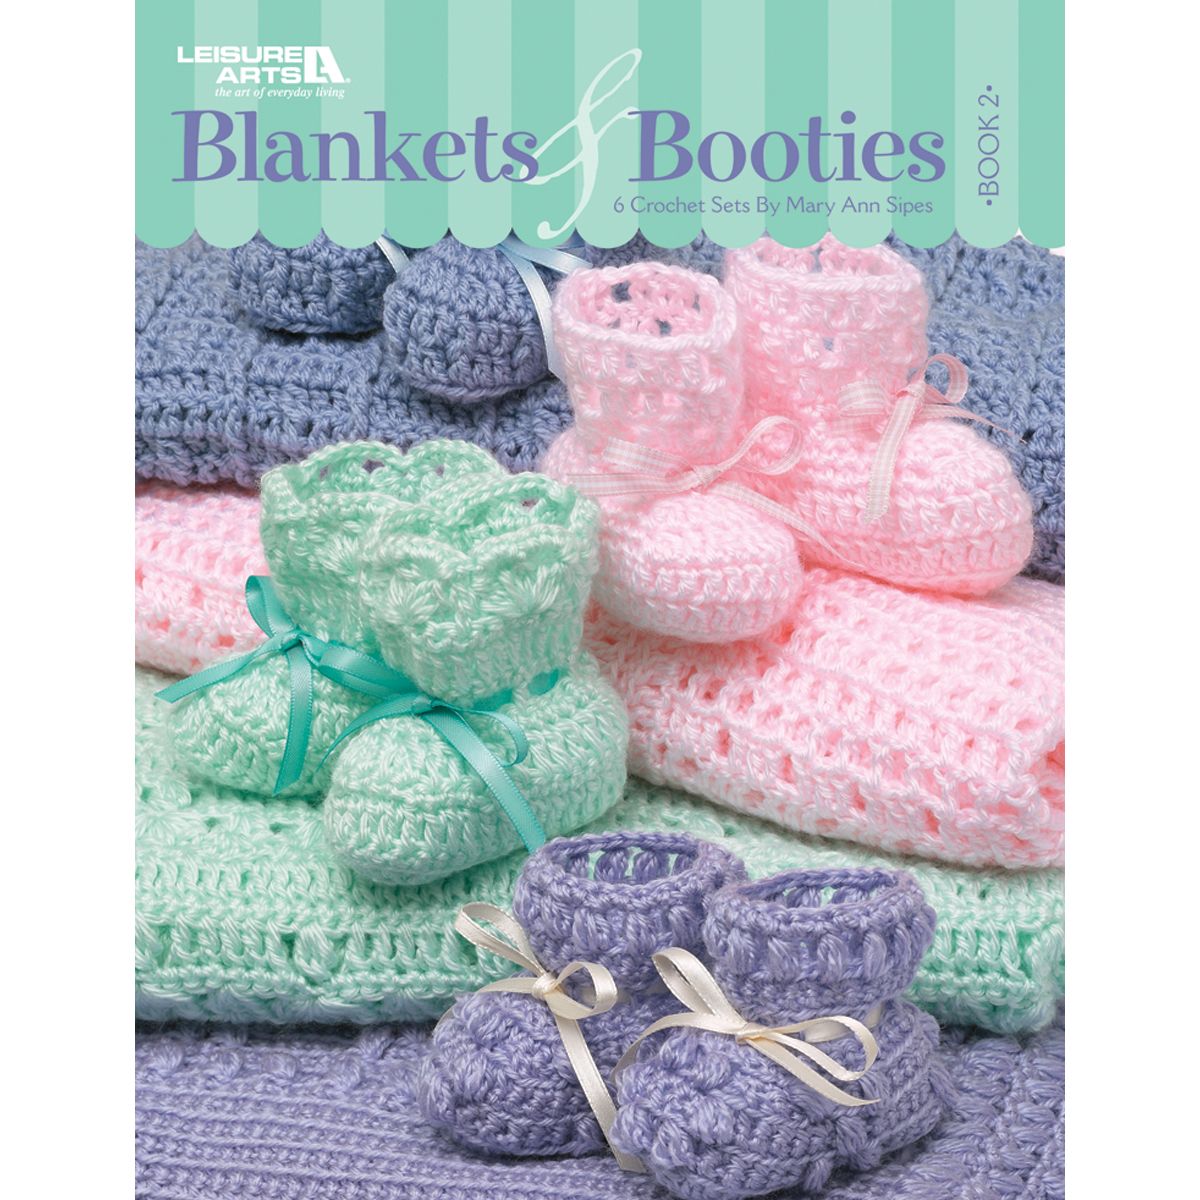 Leisure Arts-Blankets & Booties  Book 2